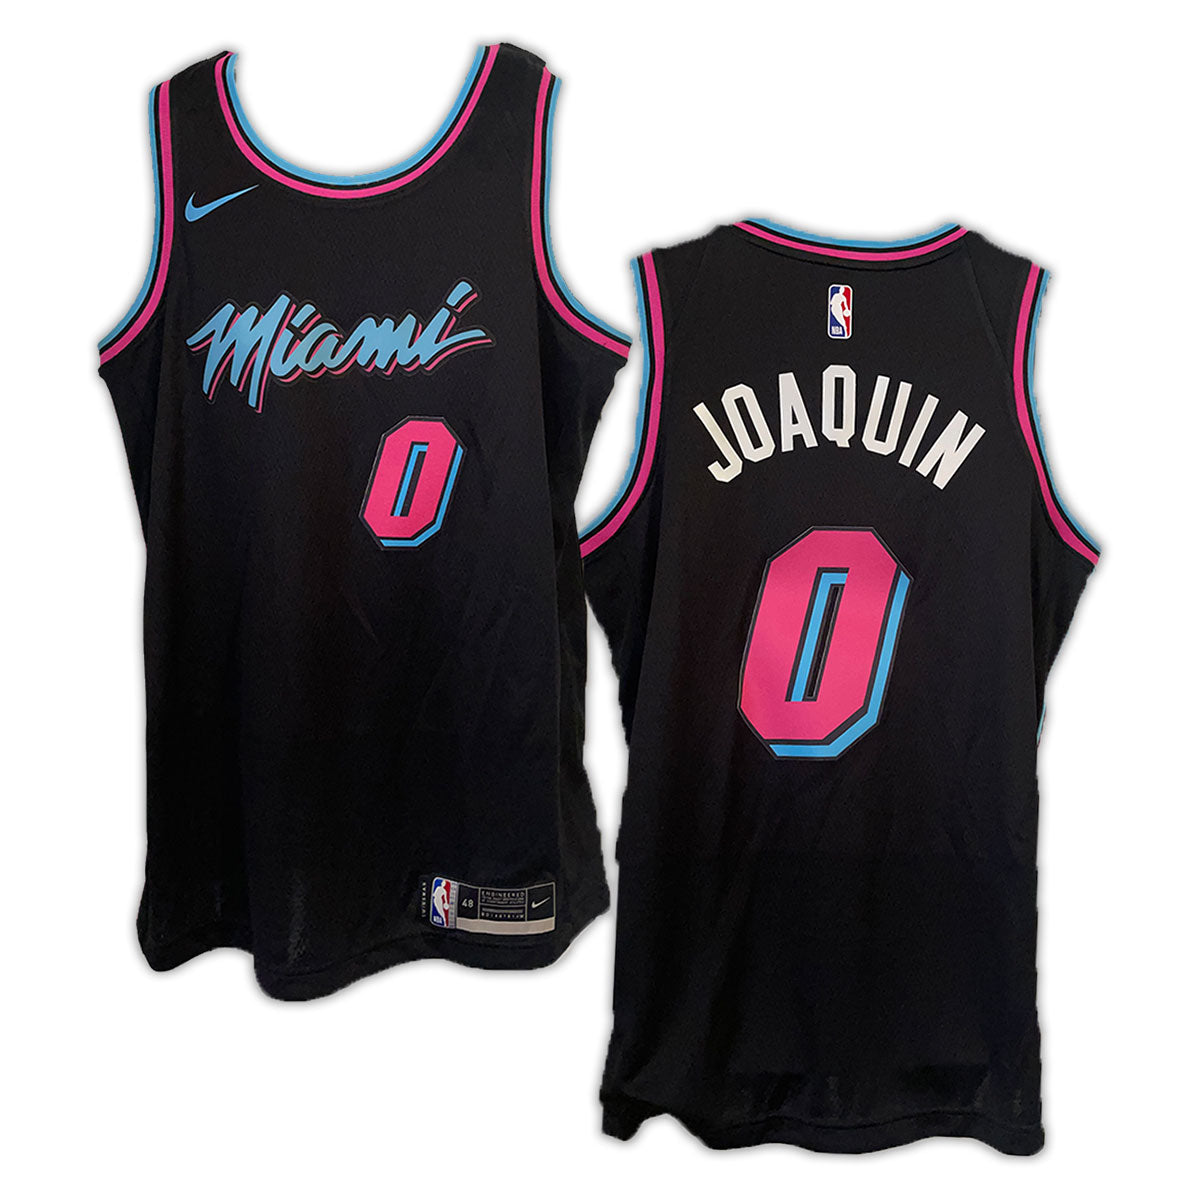 NBA: Miami Heat unveil incredibly cool 'Vice Nights' uniform in